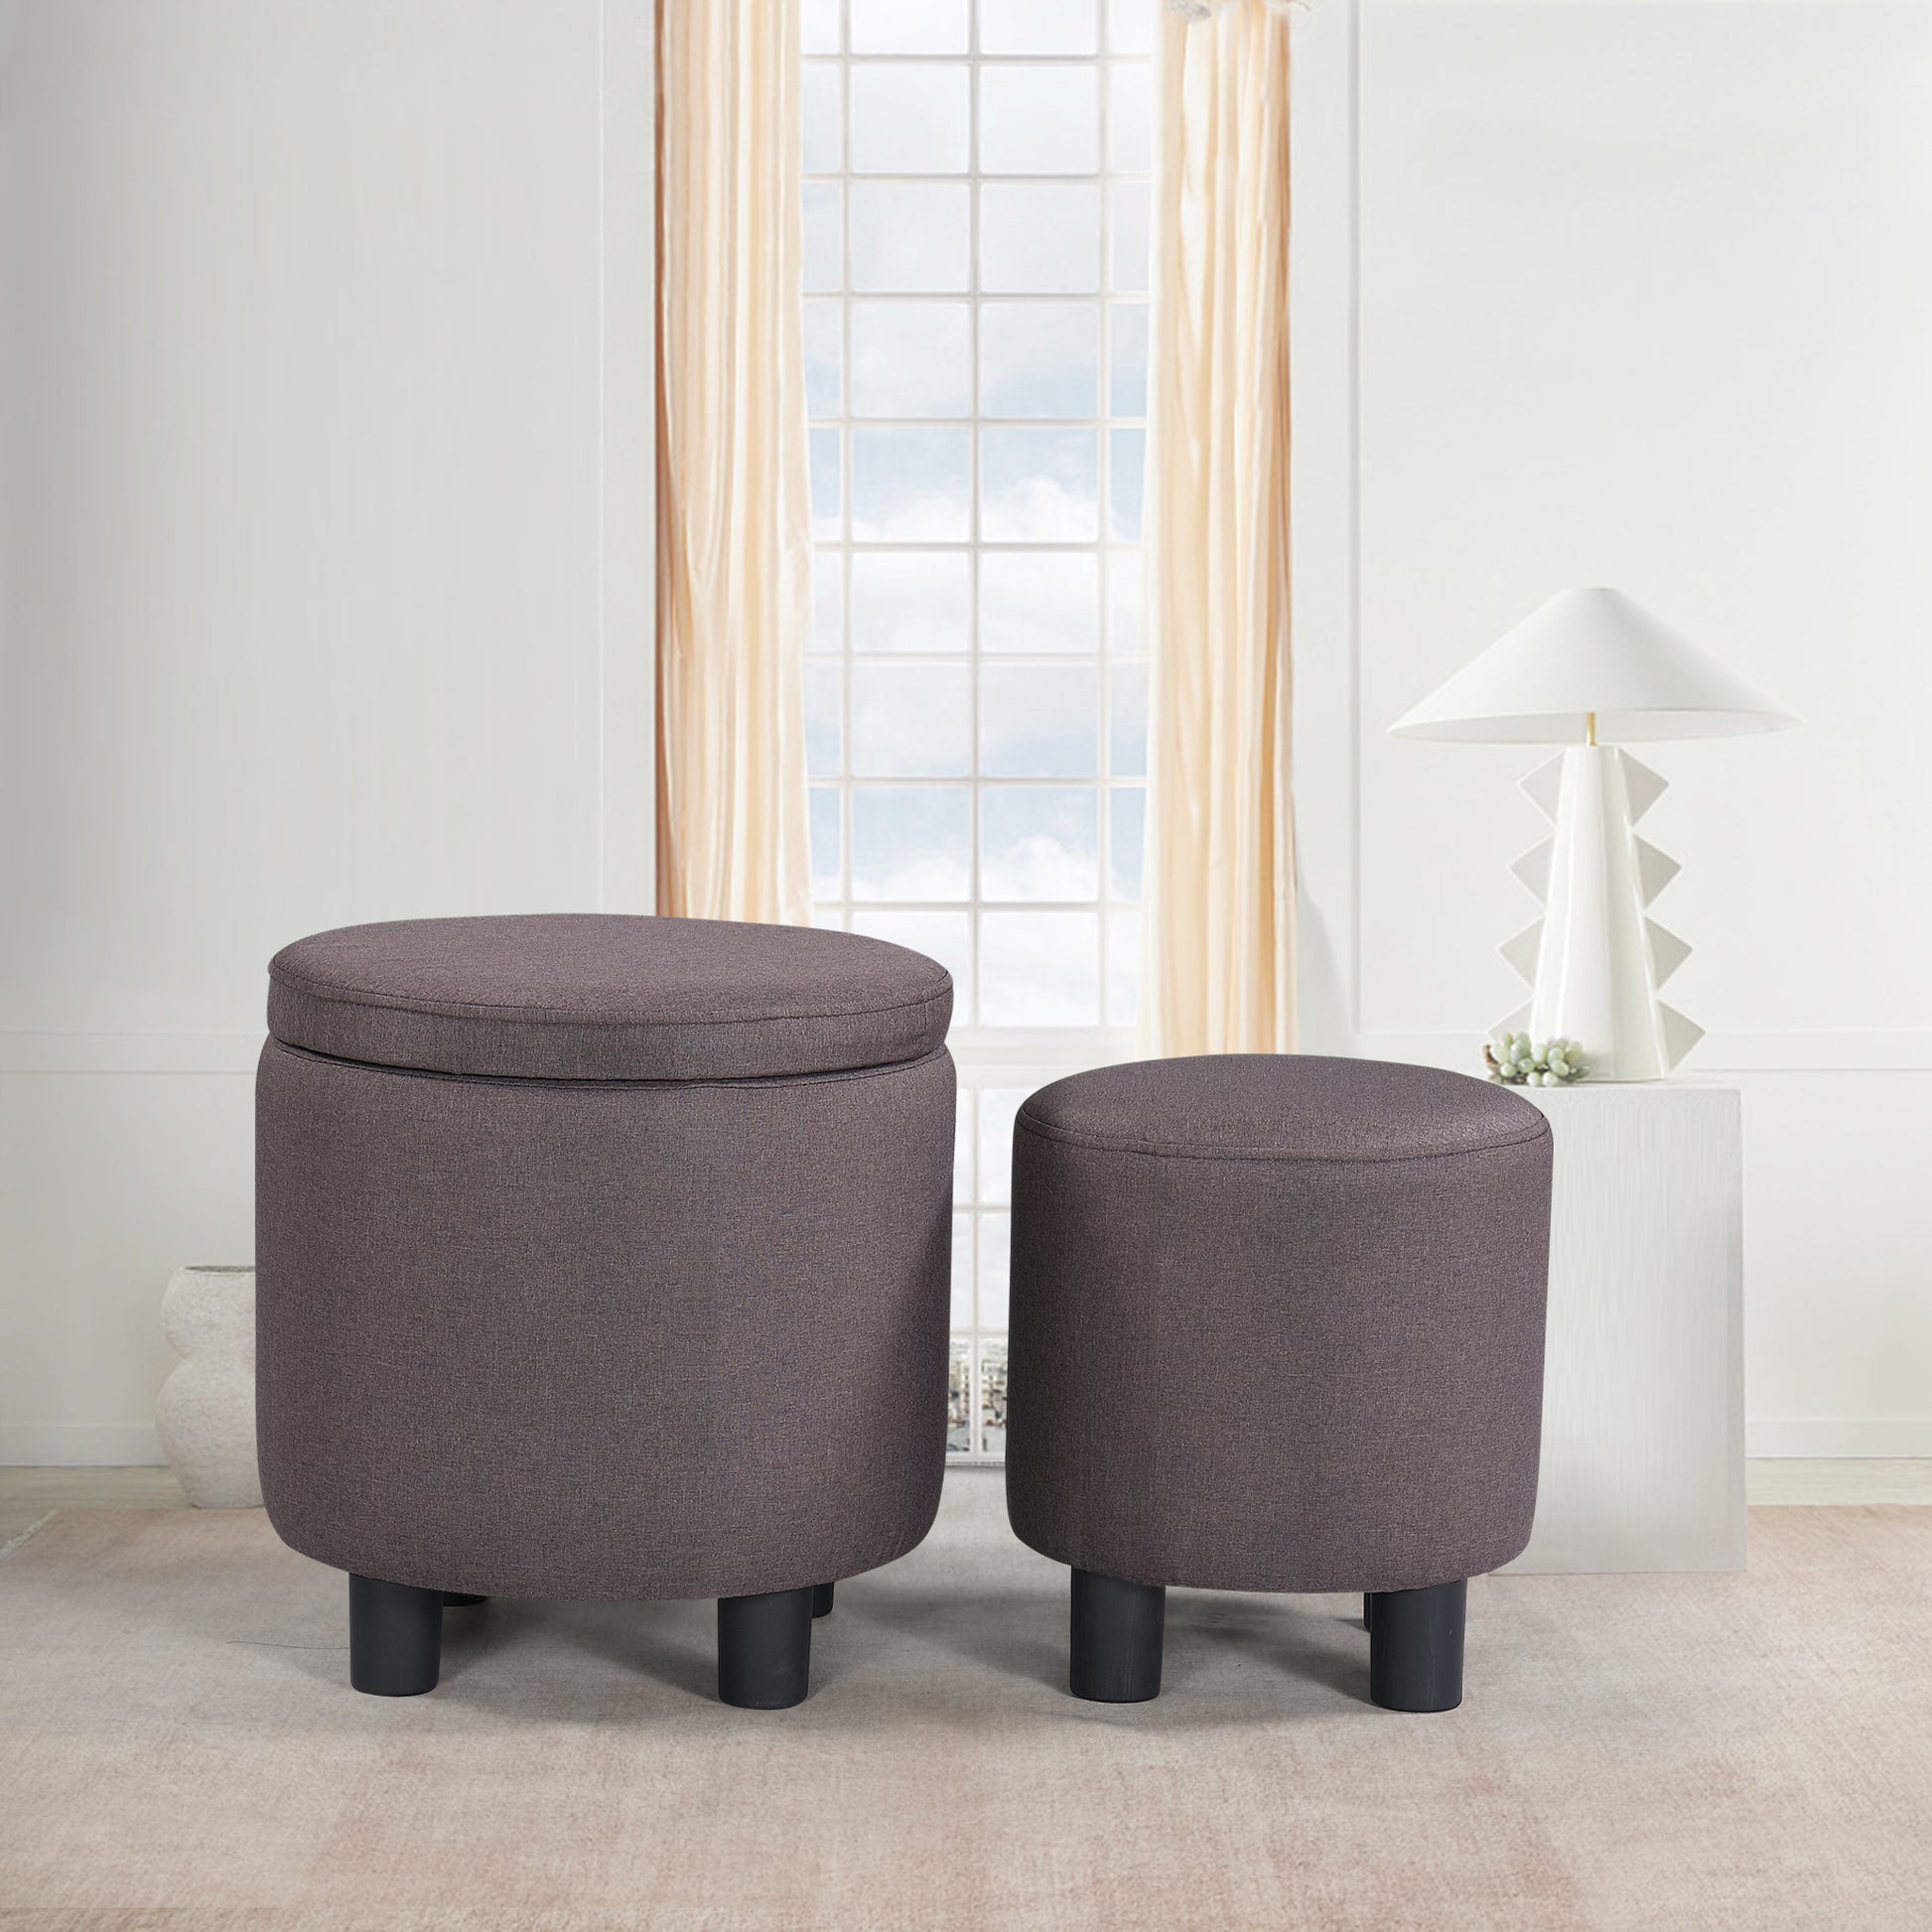 JST Home Decor Upholstered Round Fabric Tufted brown-carbon fiber